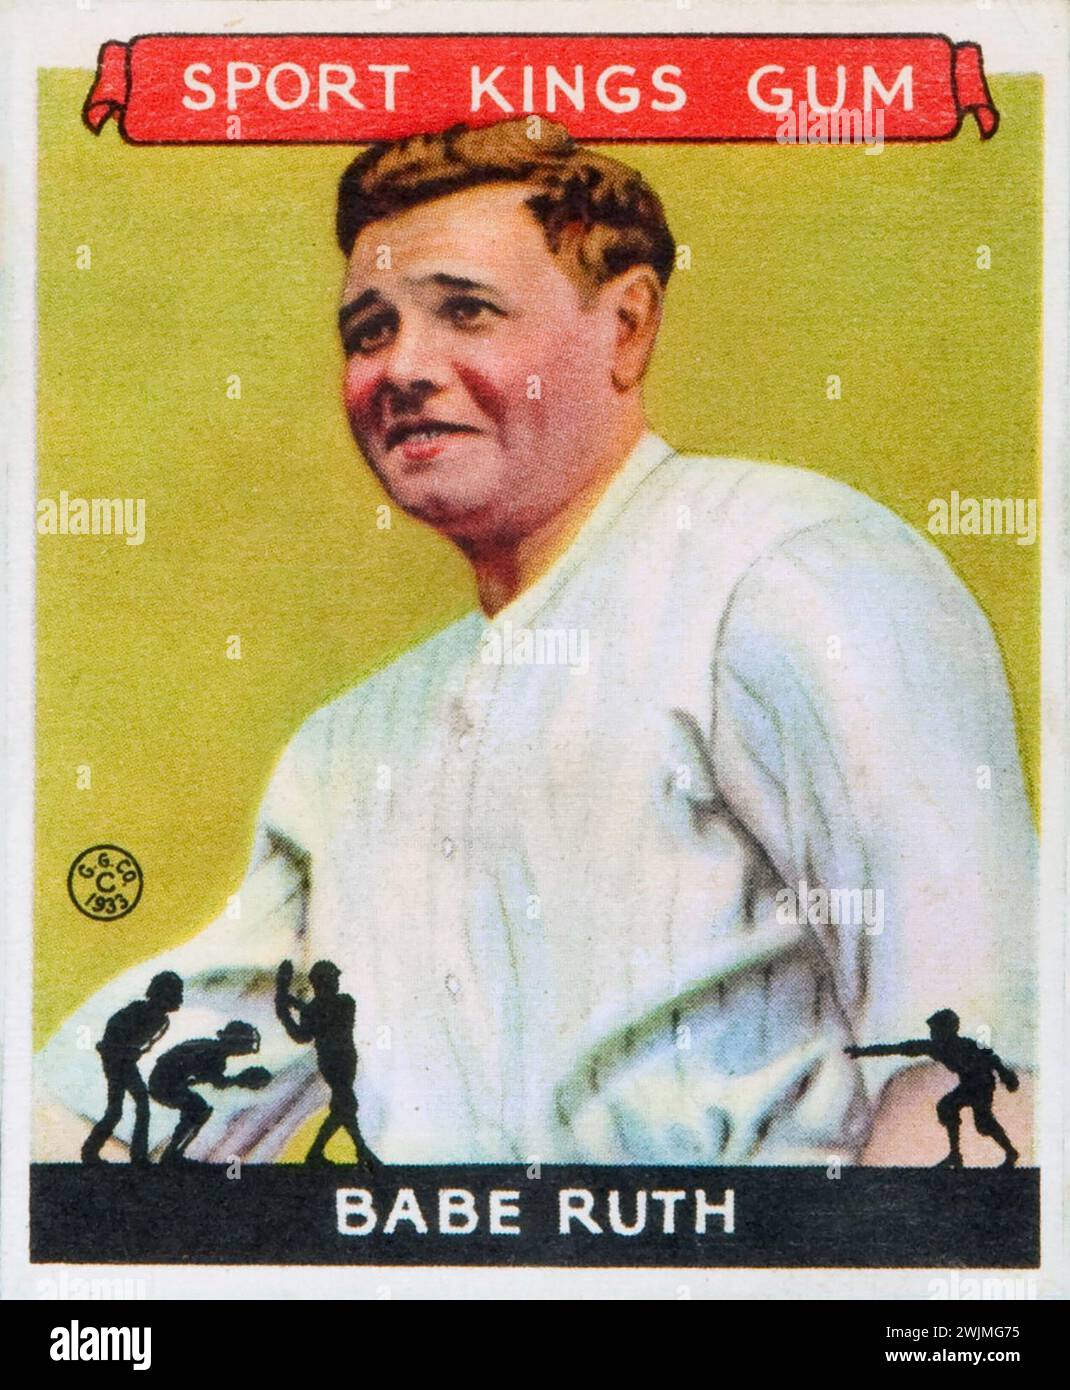 Goudey Sport Kings Gum, Bubble gum, baseball Card feat. Babe Ruth, 1933 anni Foto Stock